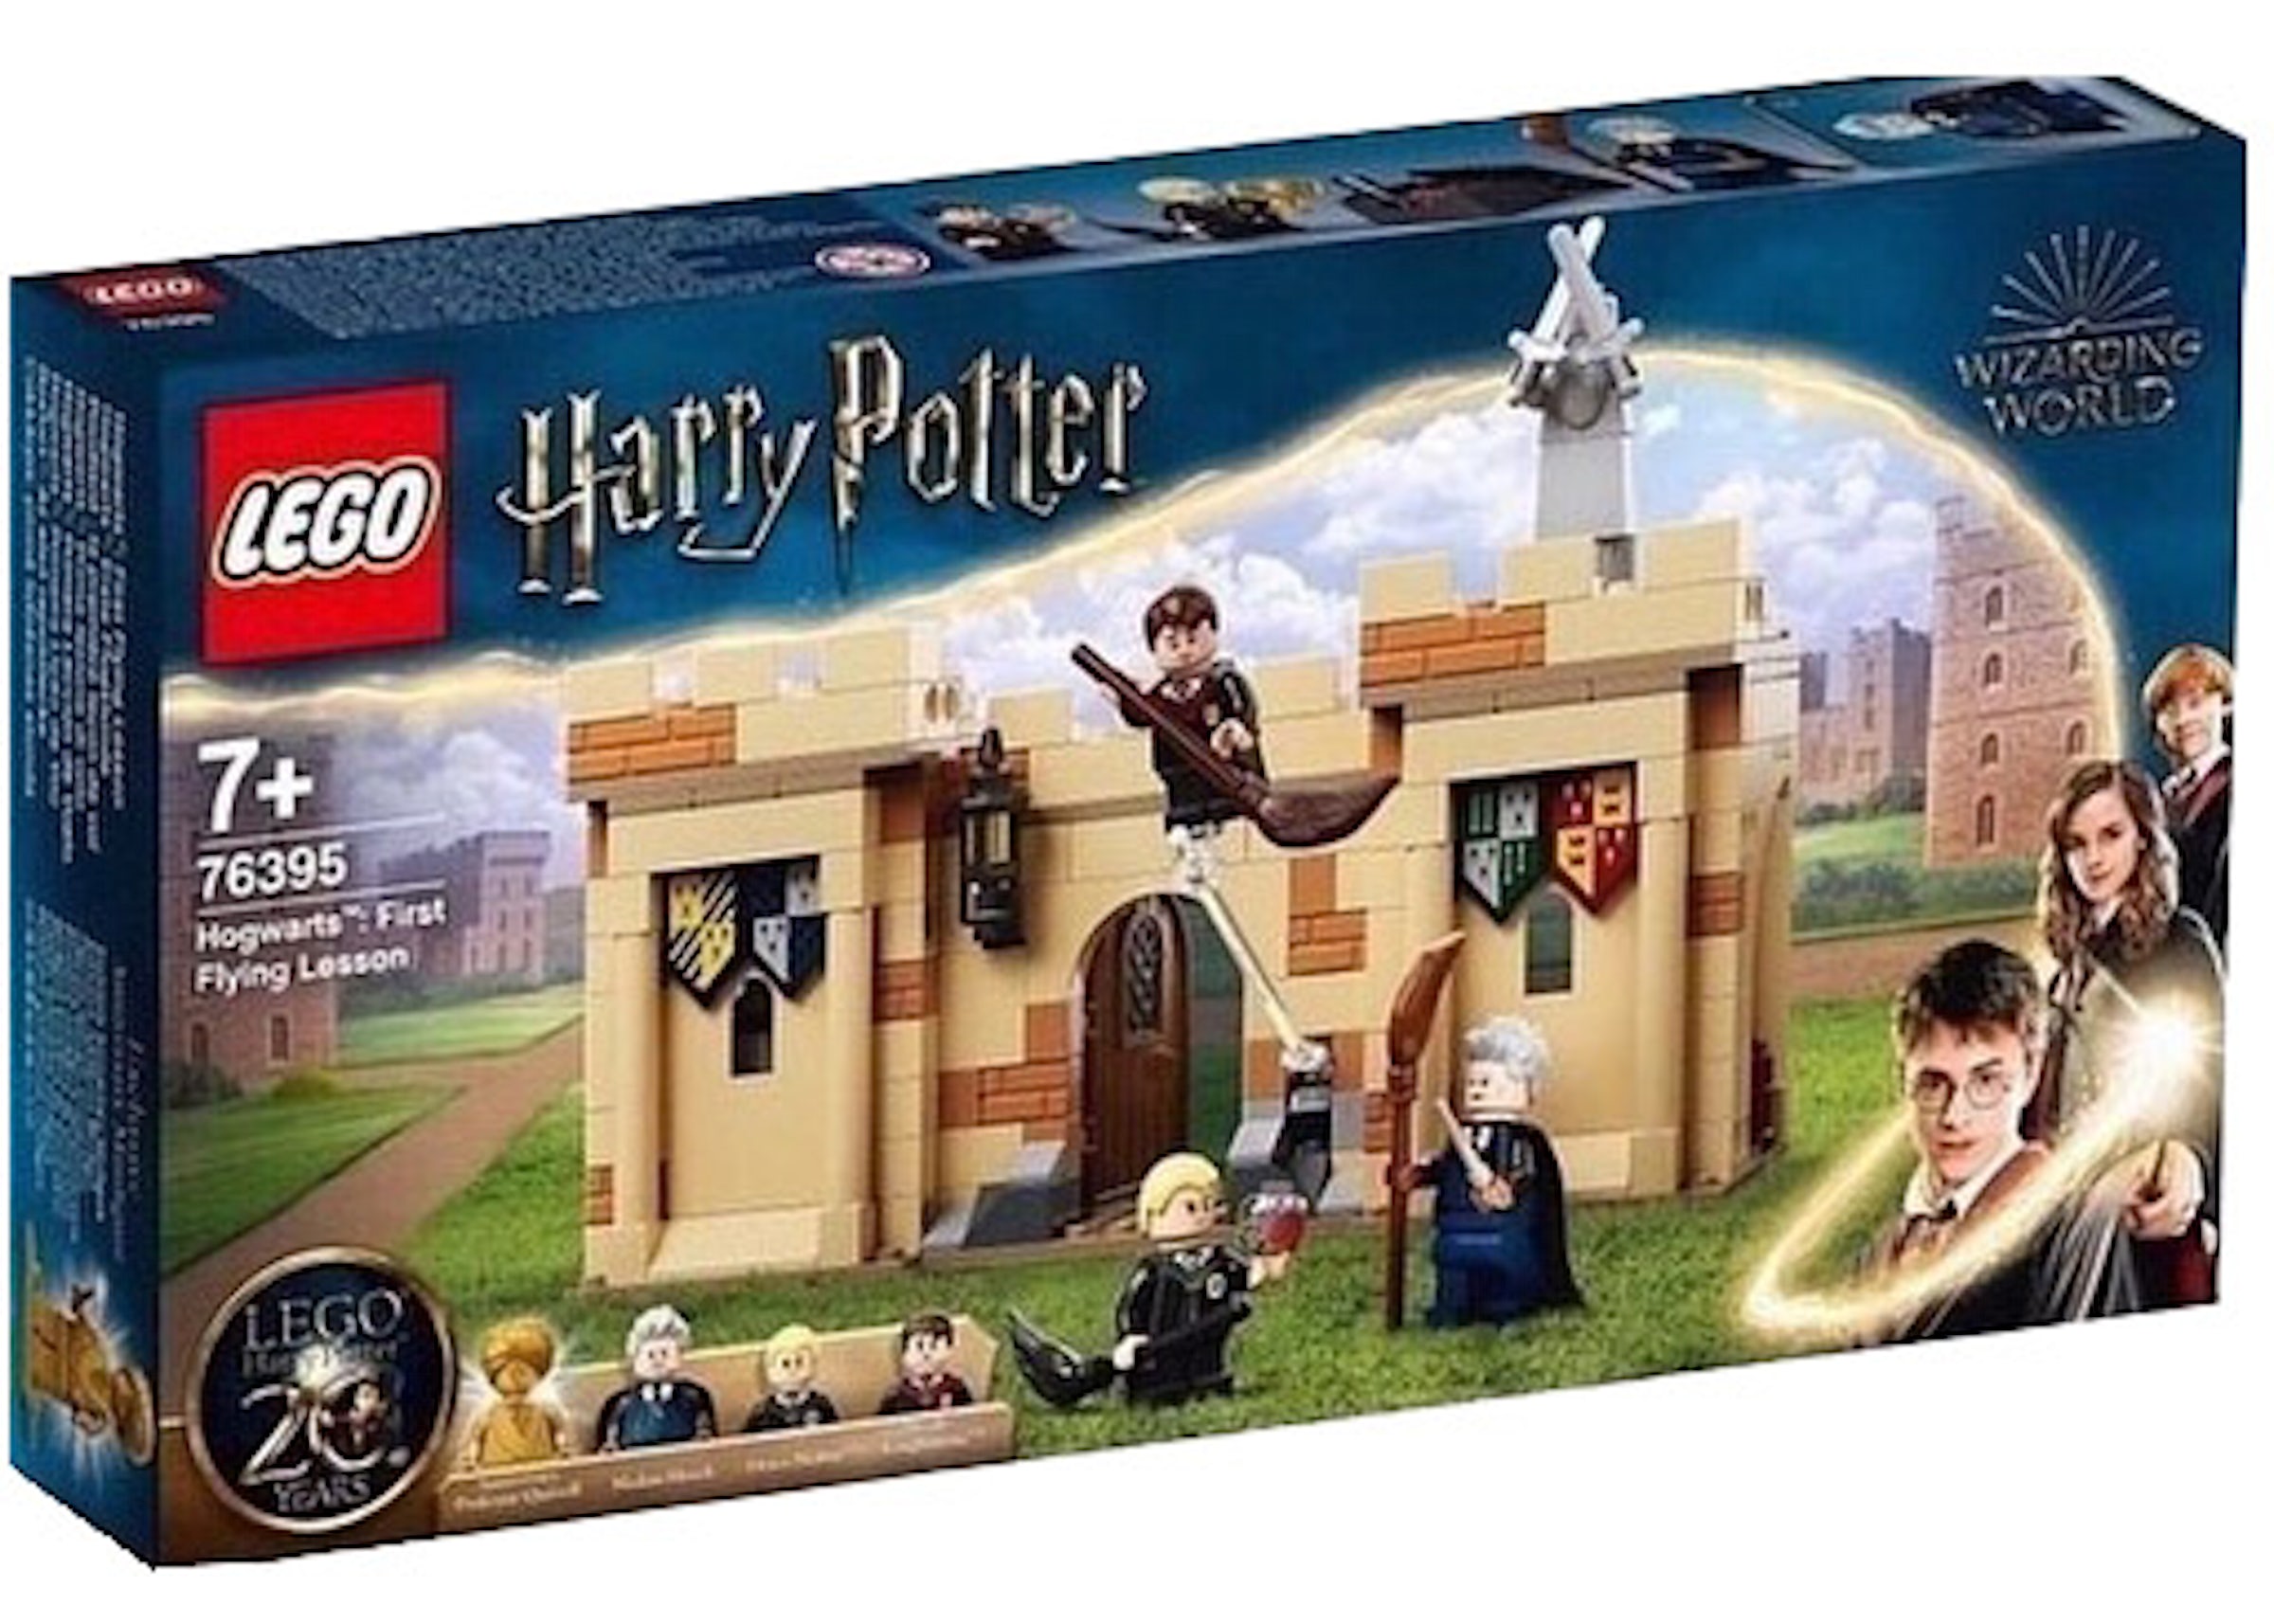 Lego Harry Potter First Flying Lesson Hogwarts 76395